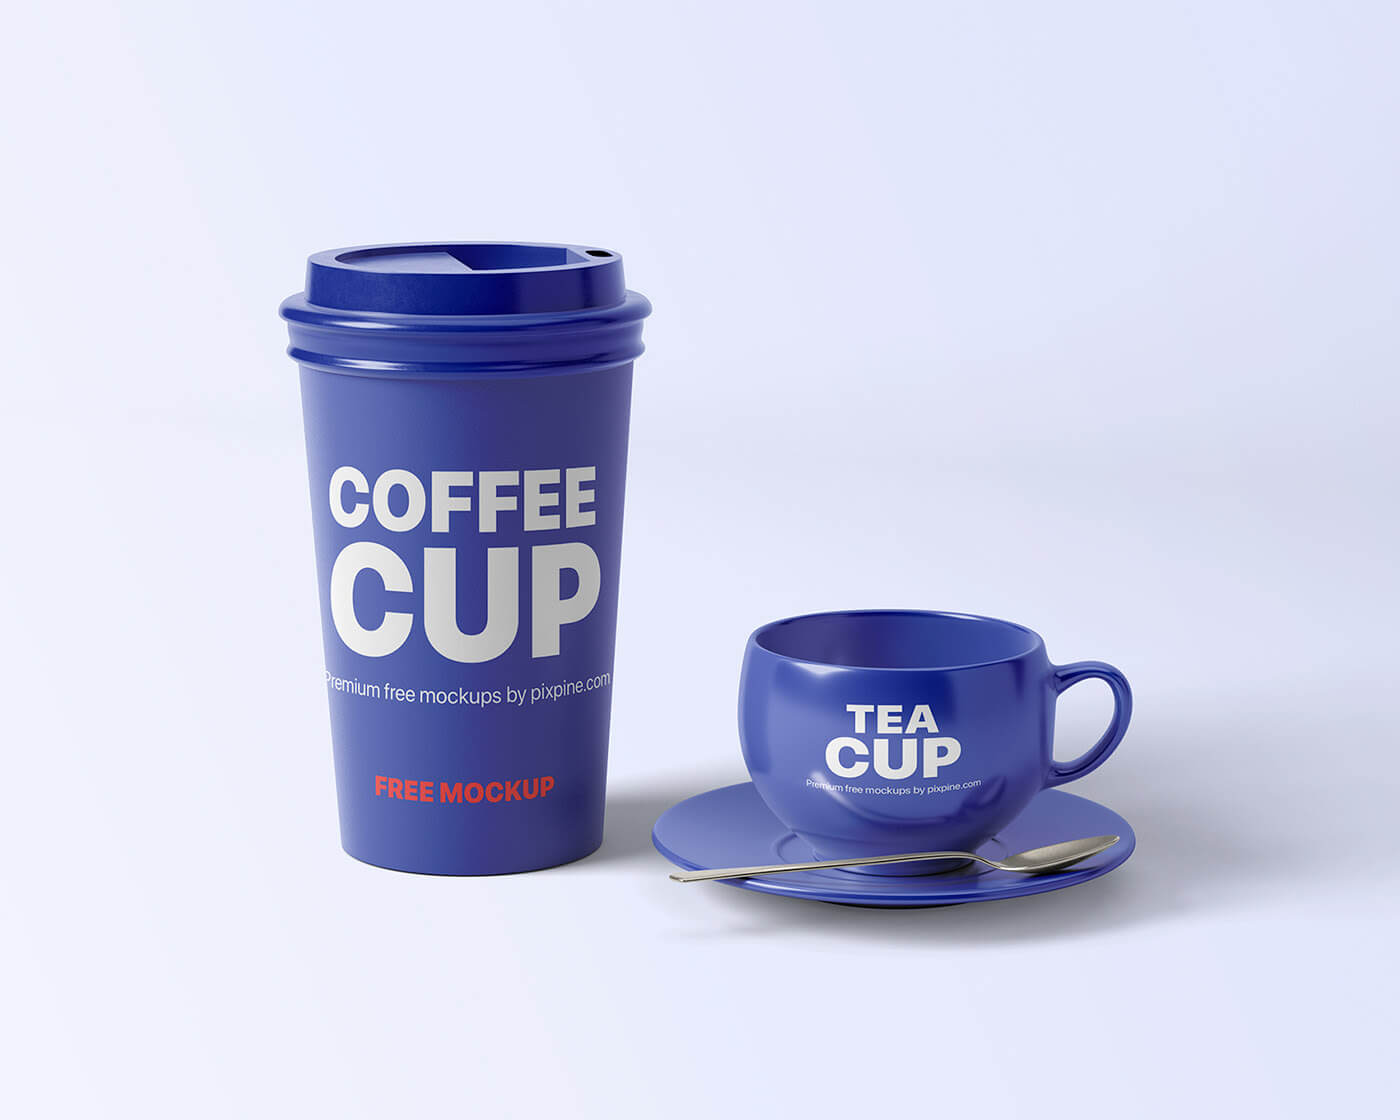 Kaffee- und Tee -Tassenmodelle